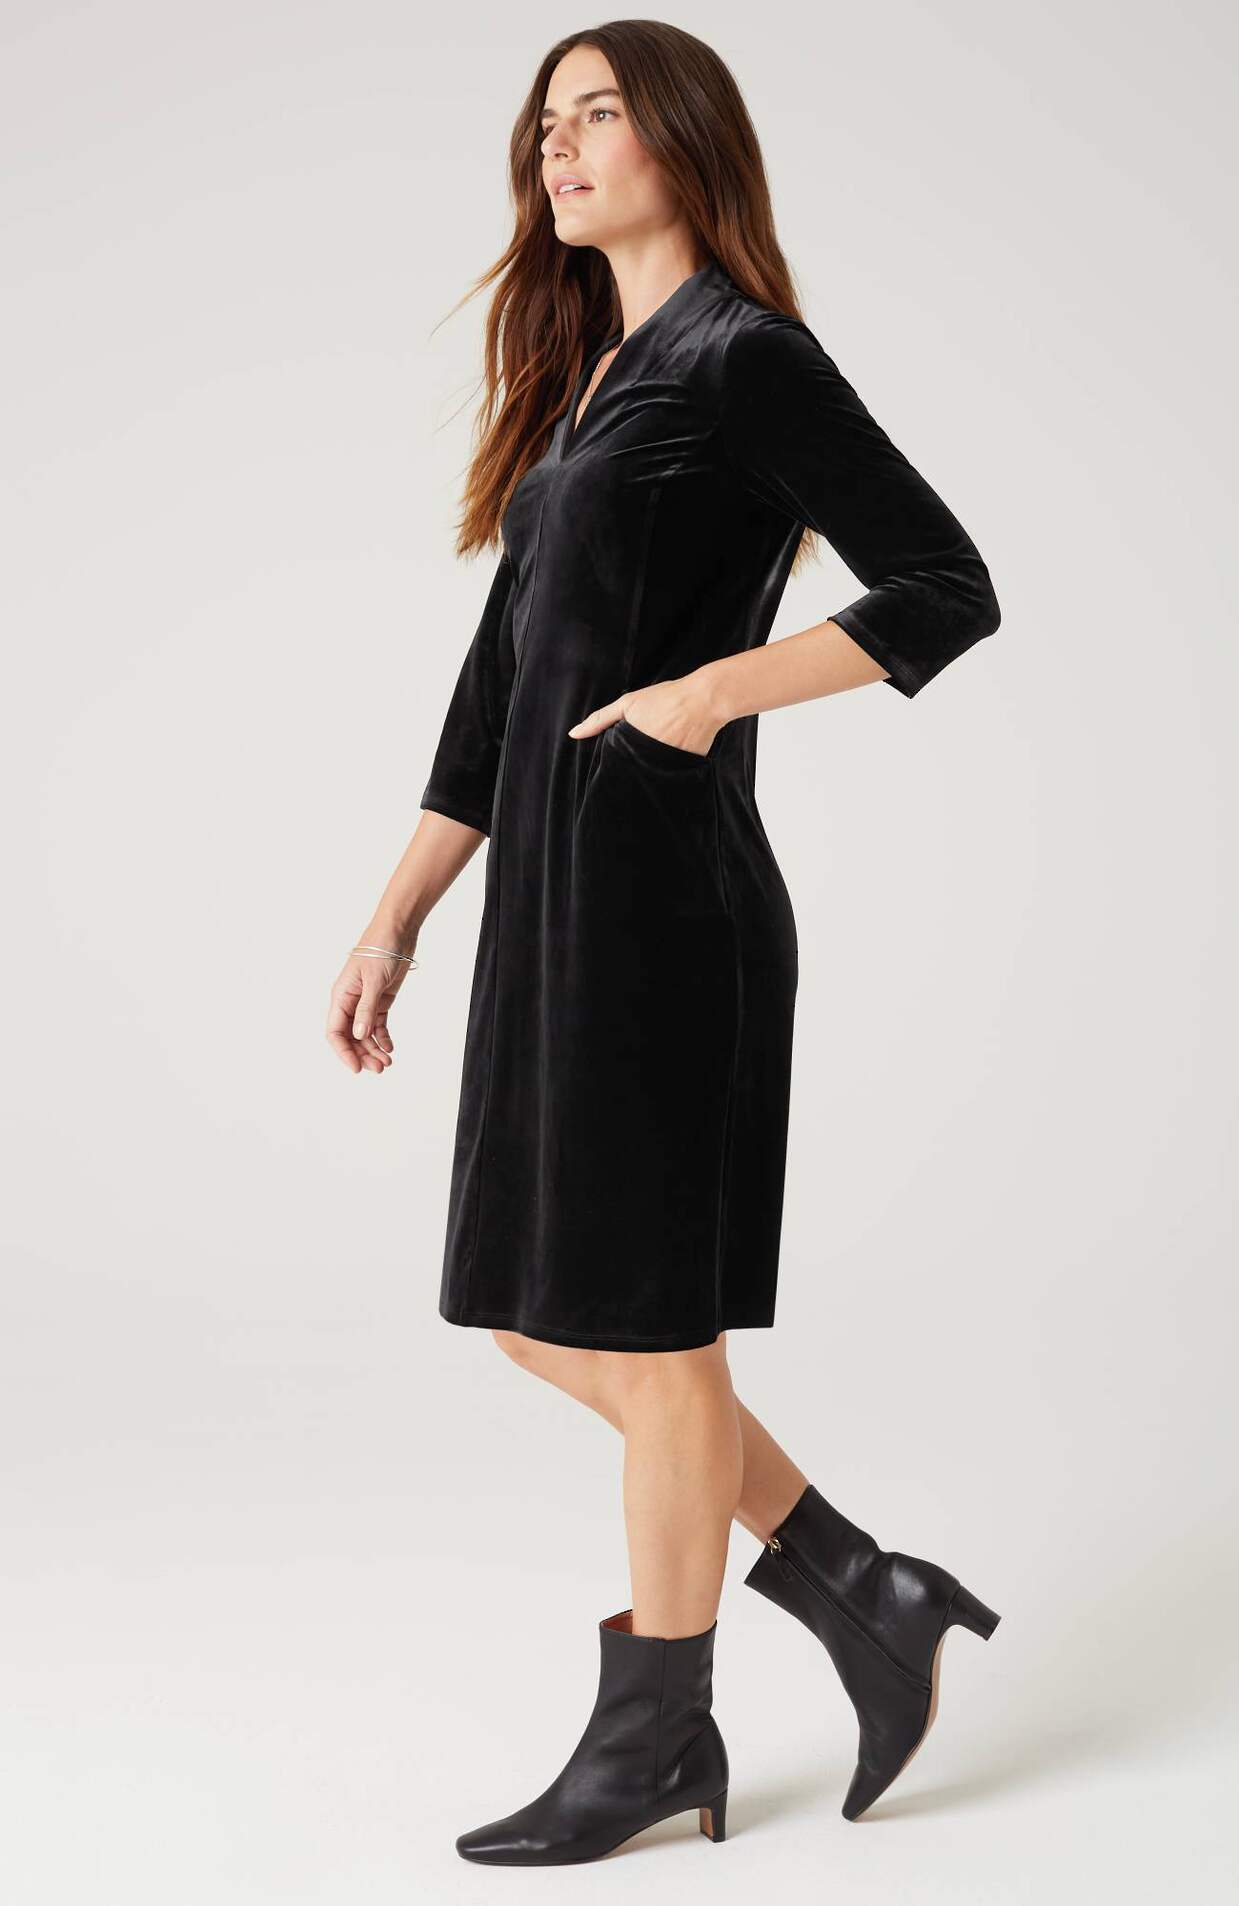 J.Jill Wearever collection black dress size medium - $28 - From Melinda